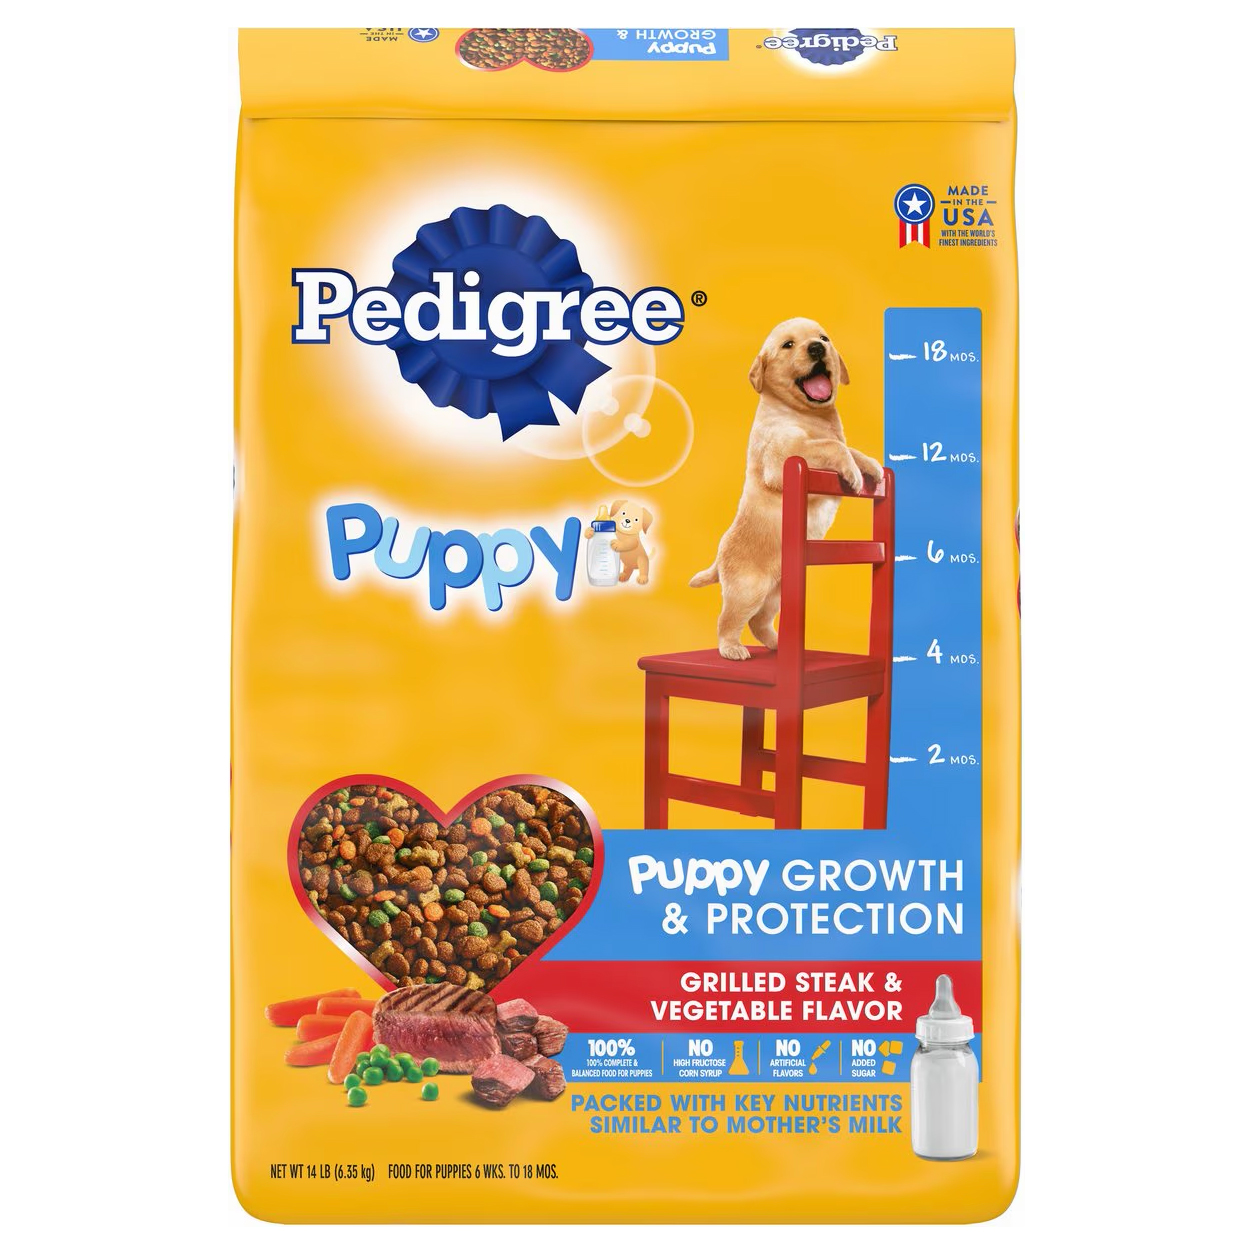 Pedigree’s Puppy Dog Food